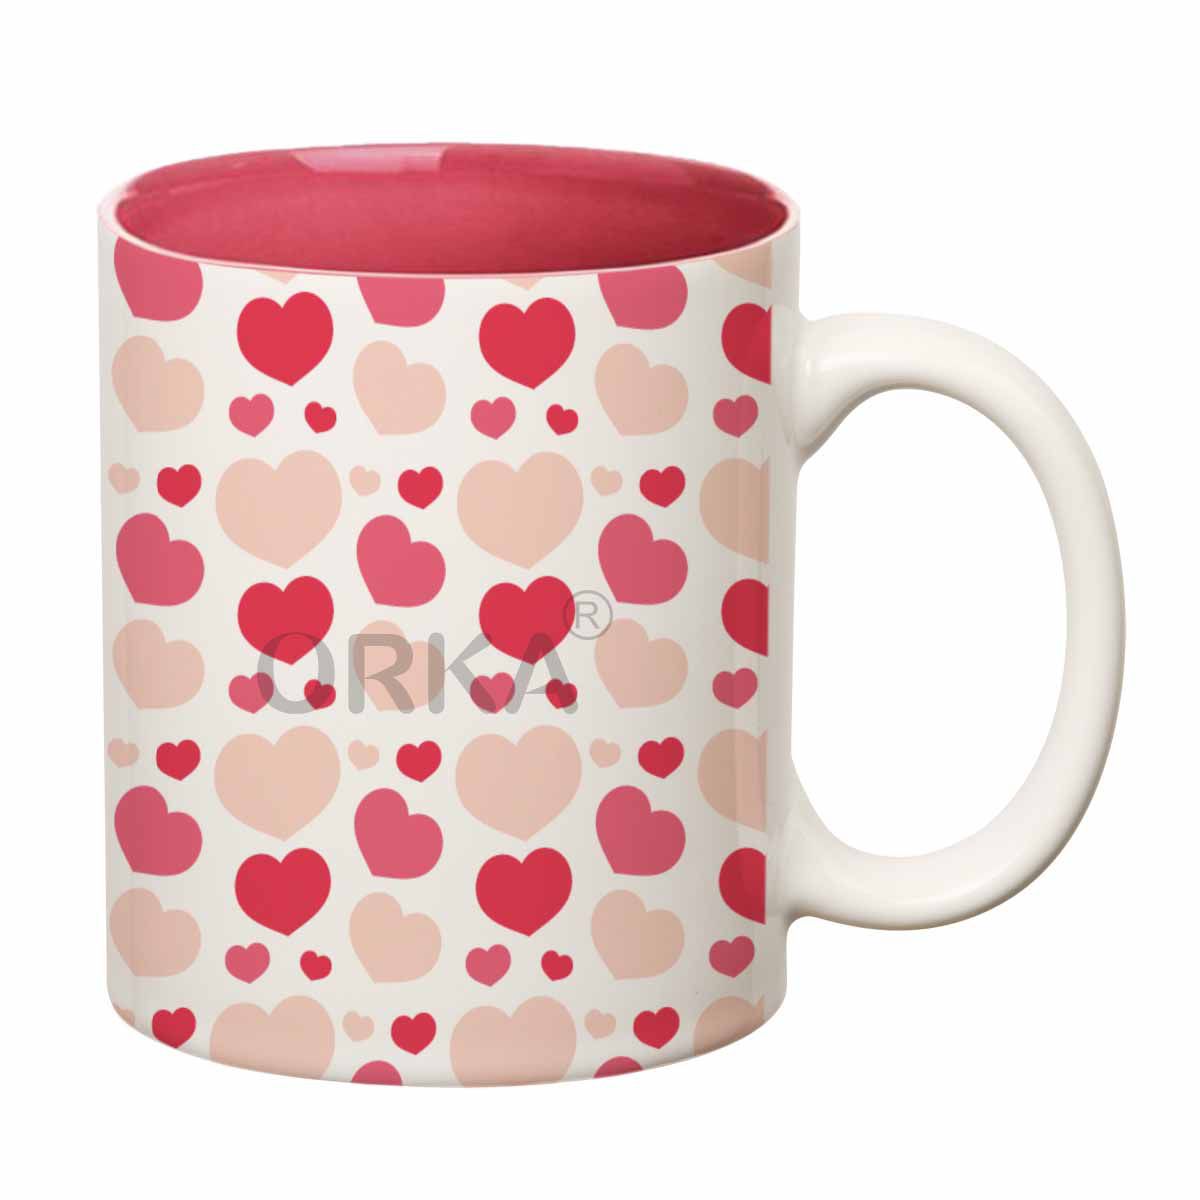 ORKA<sup>®</SUP> Heart Design Coffee Mug   